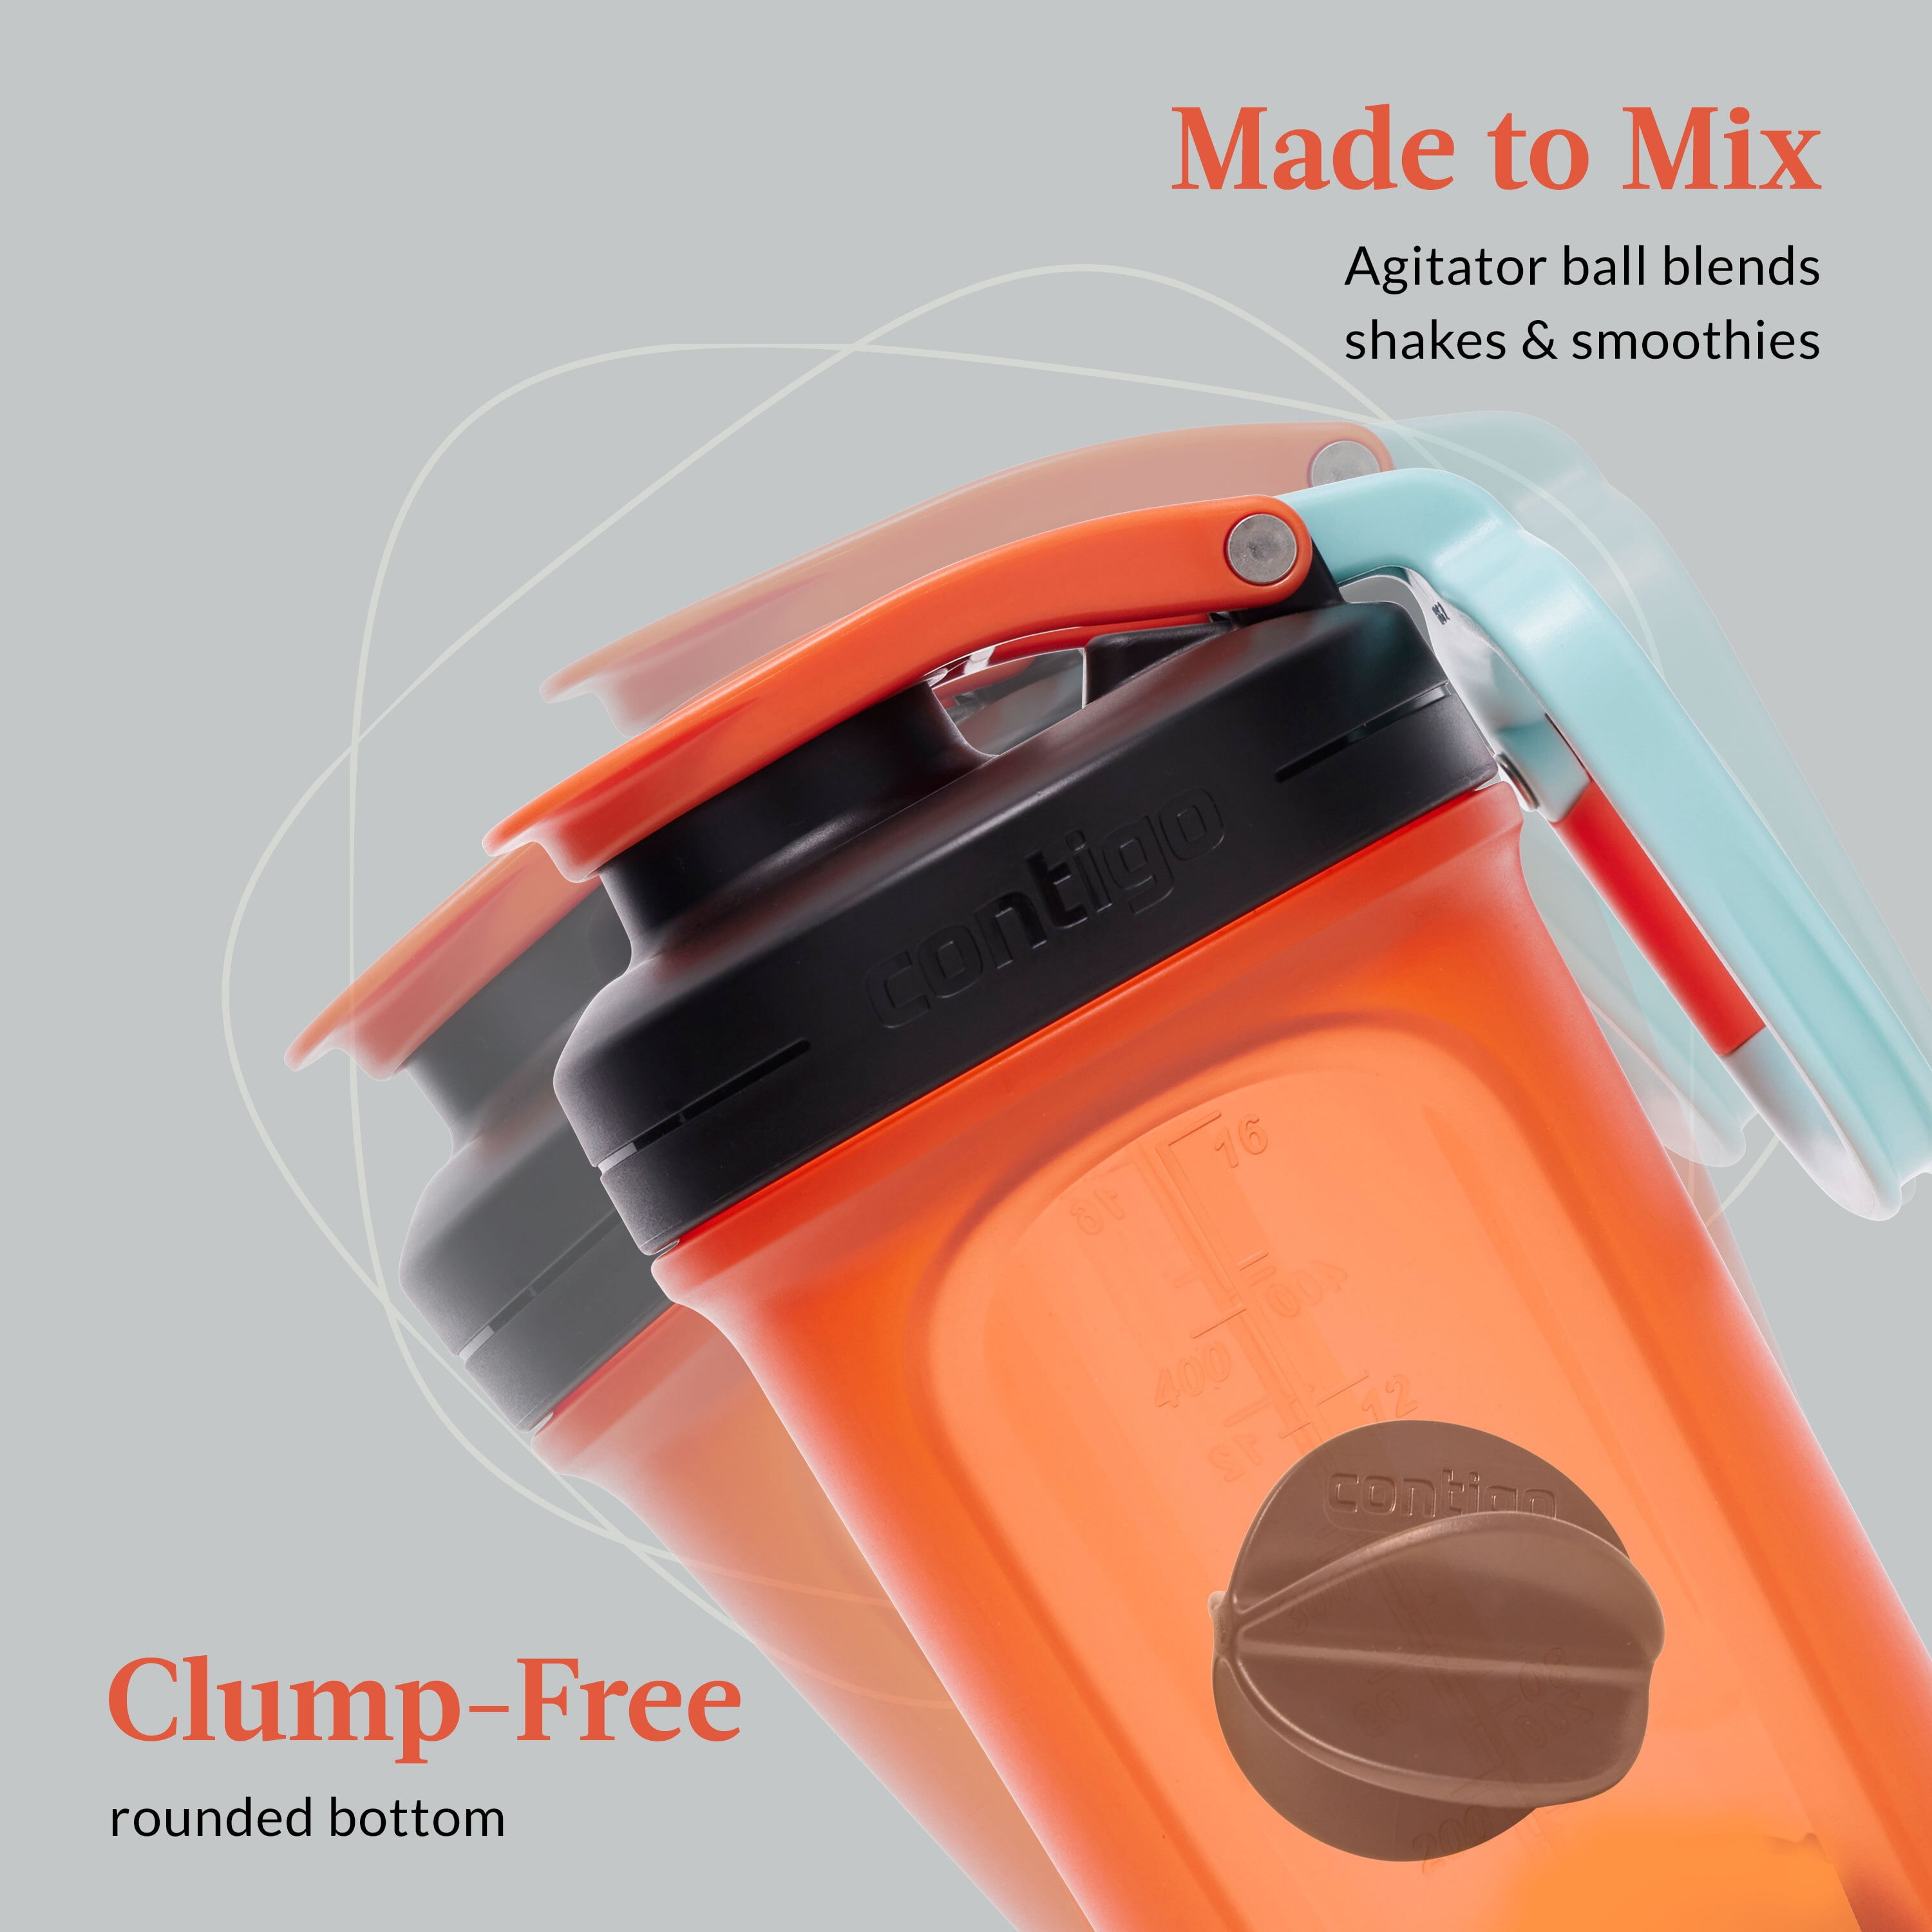 XS® Energy Blender Bottle Shaker - Blue/Pink/Yellow - AmwayGear